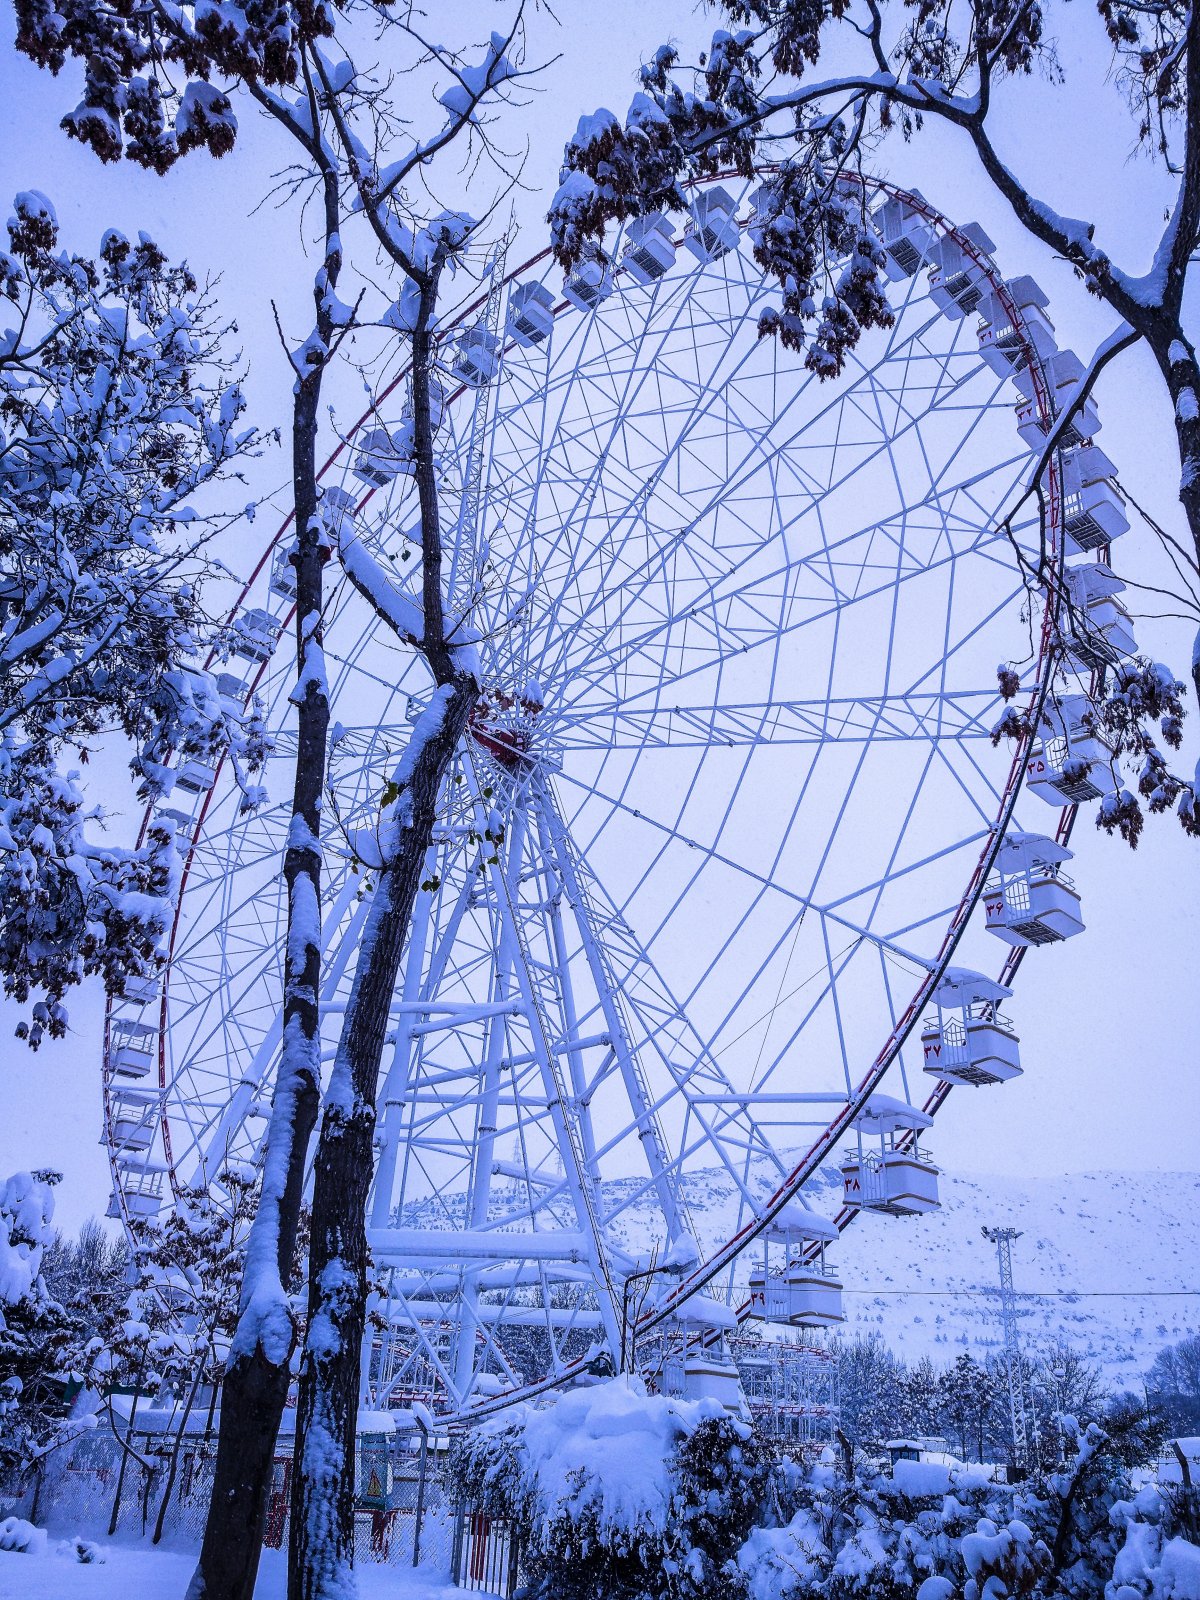 Outdoor ferris wheel snow picture